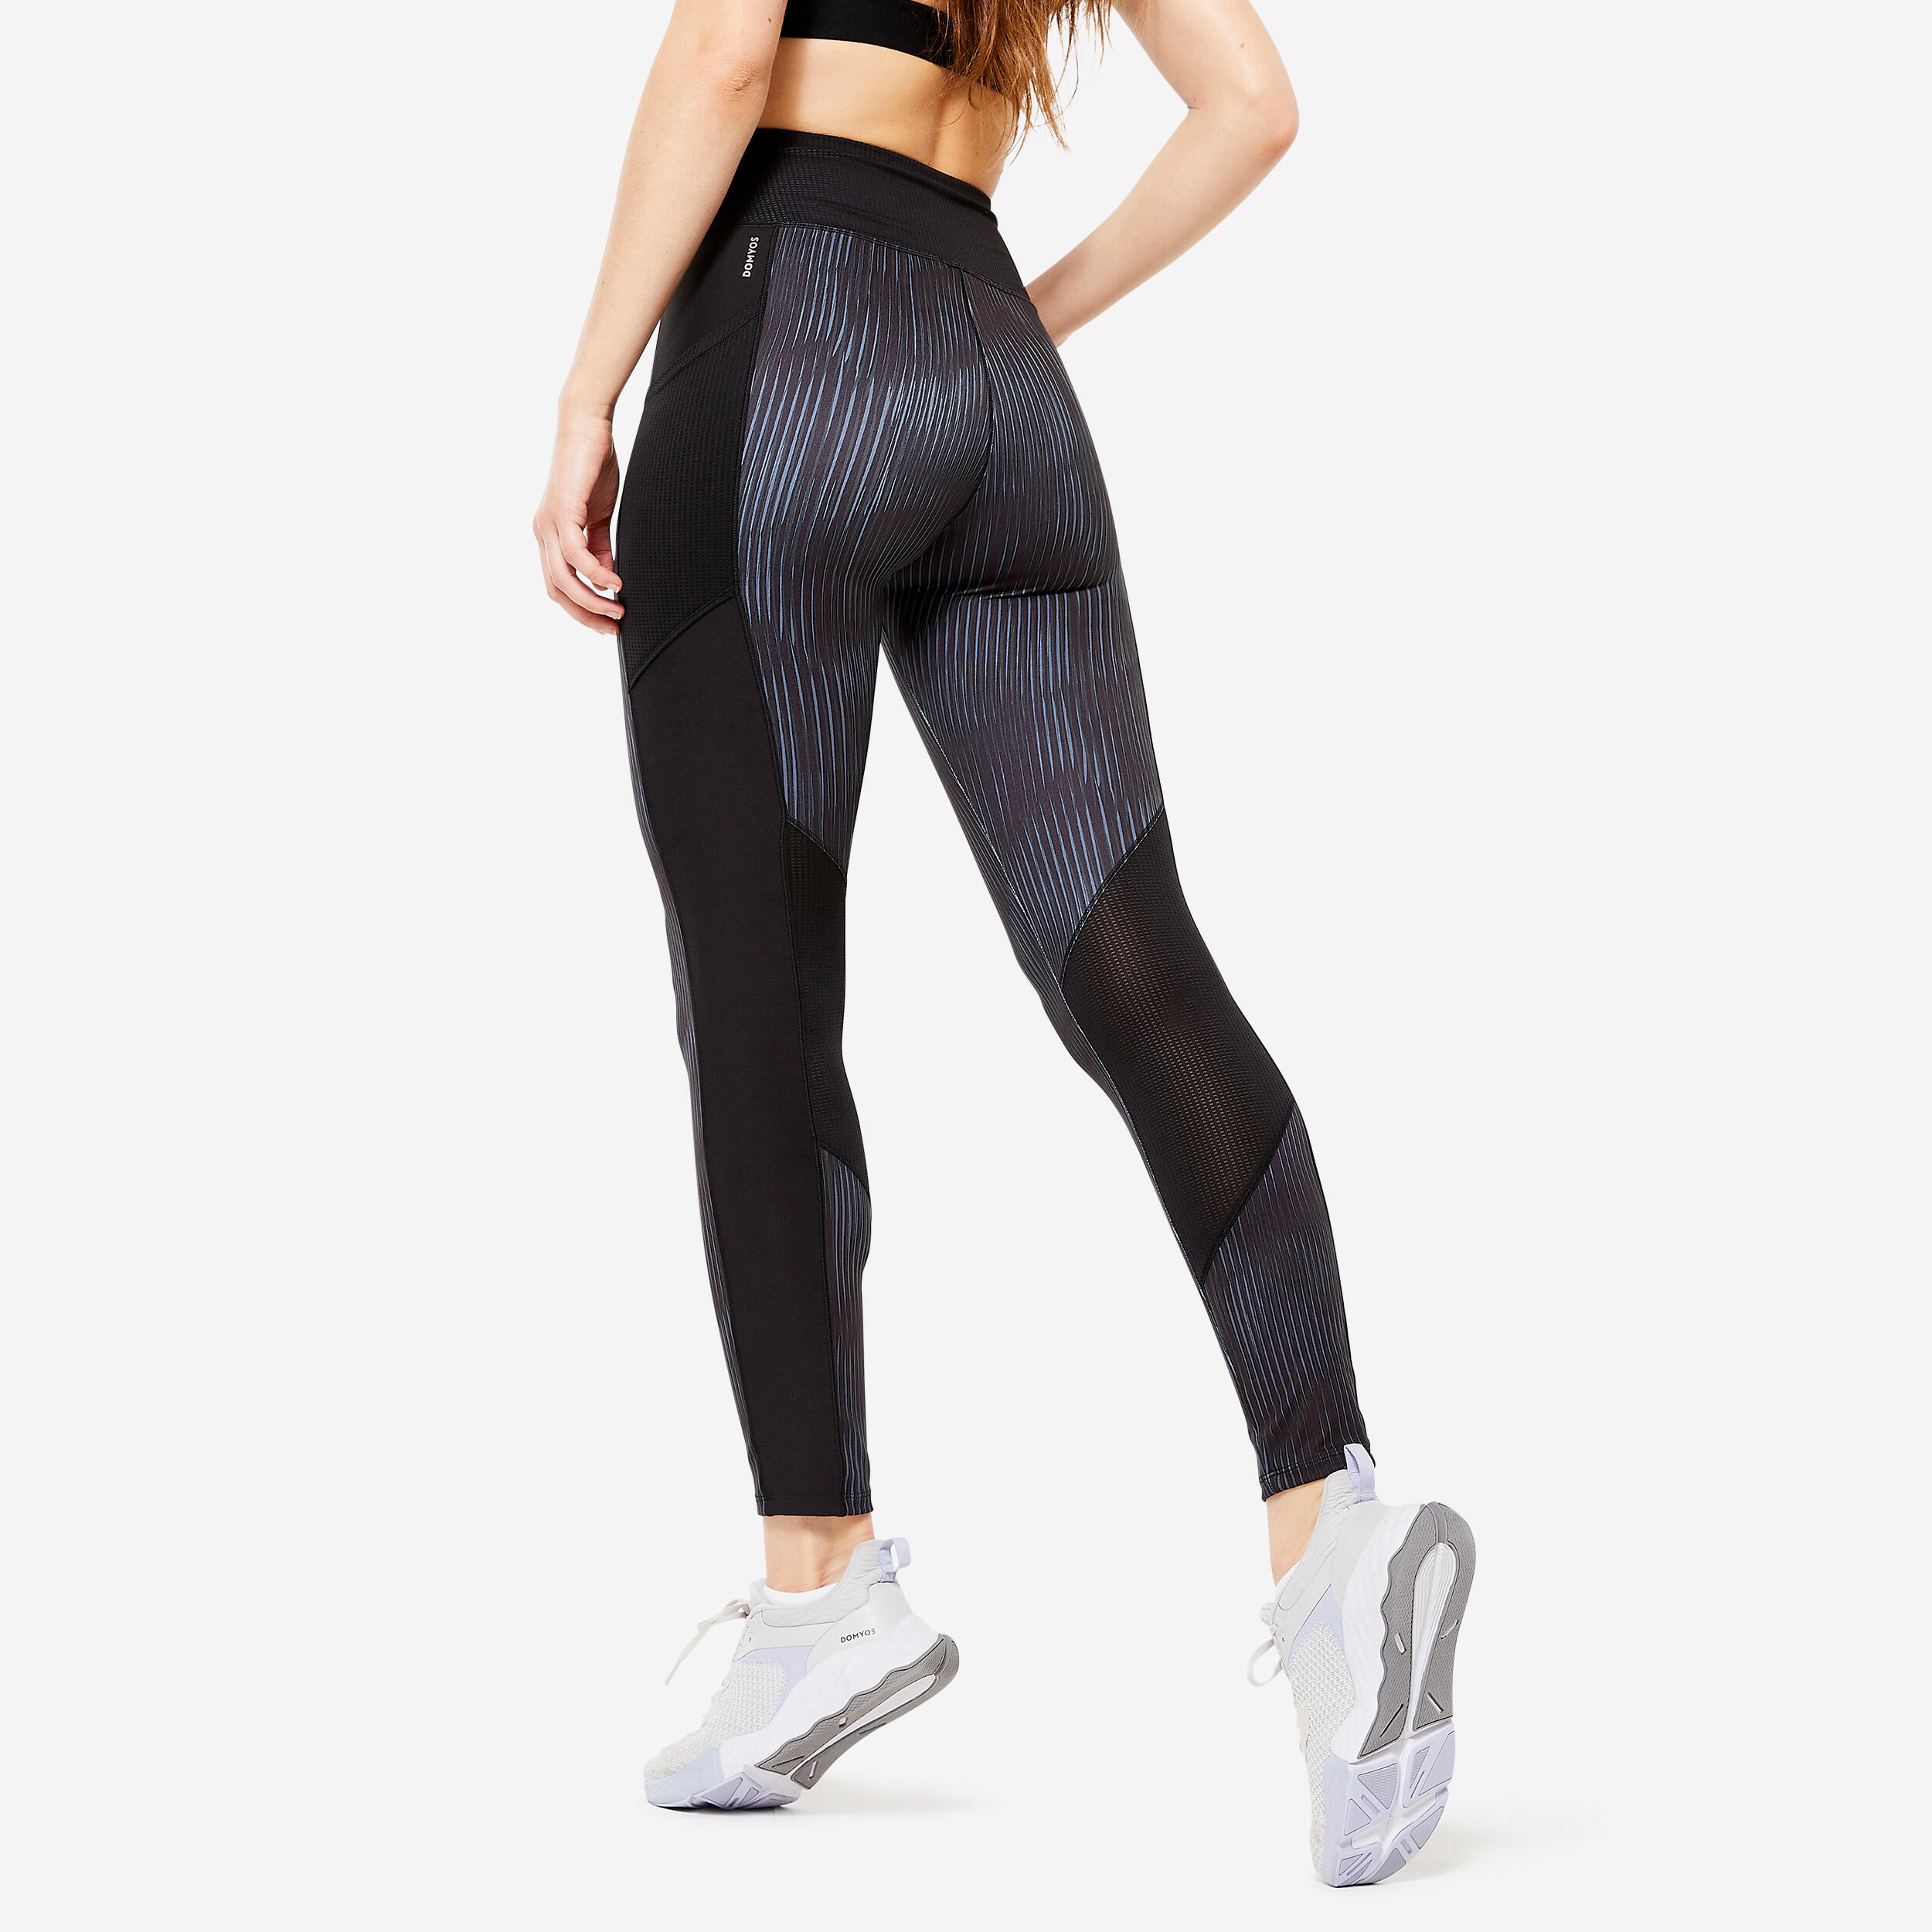 Women's Fitness Cardio Leggings with Phone Pocket - Black/Grey Print DOMYOS